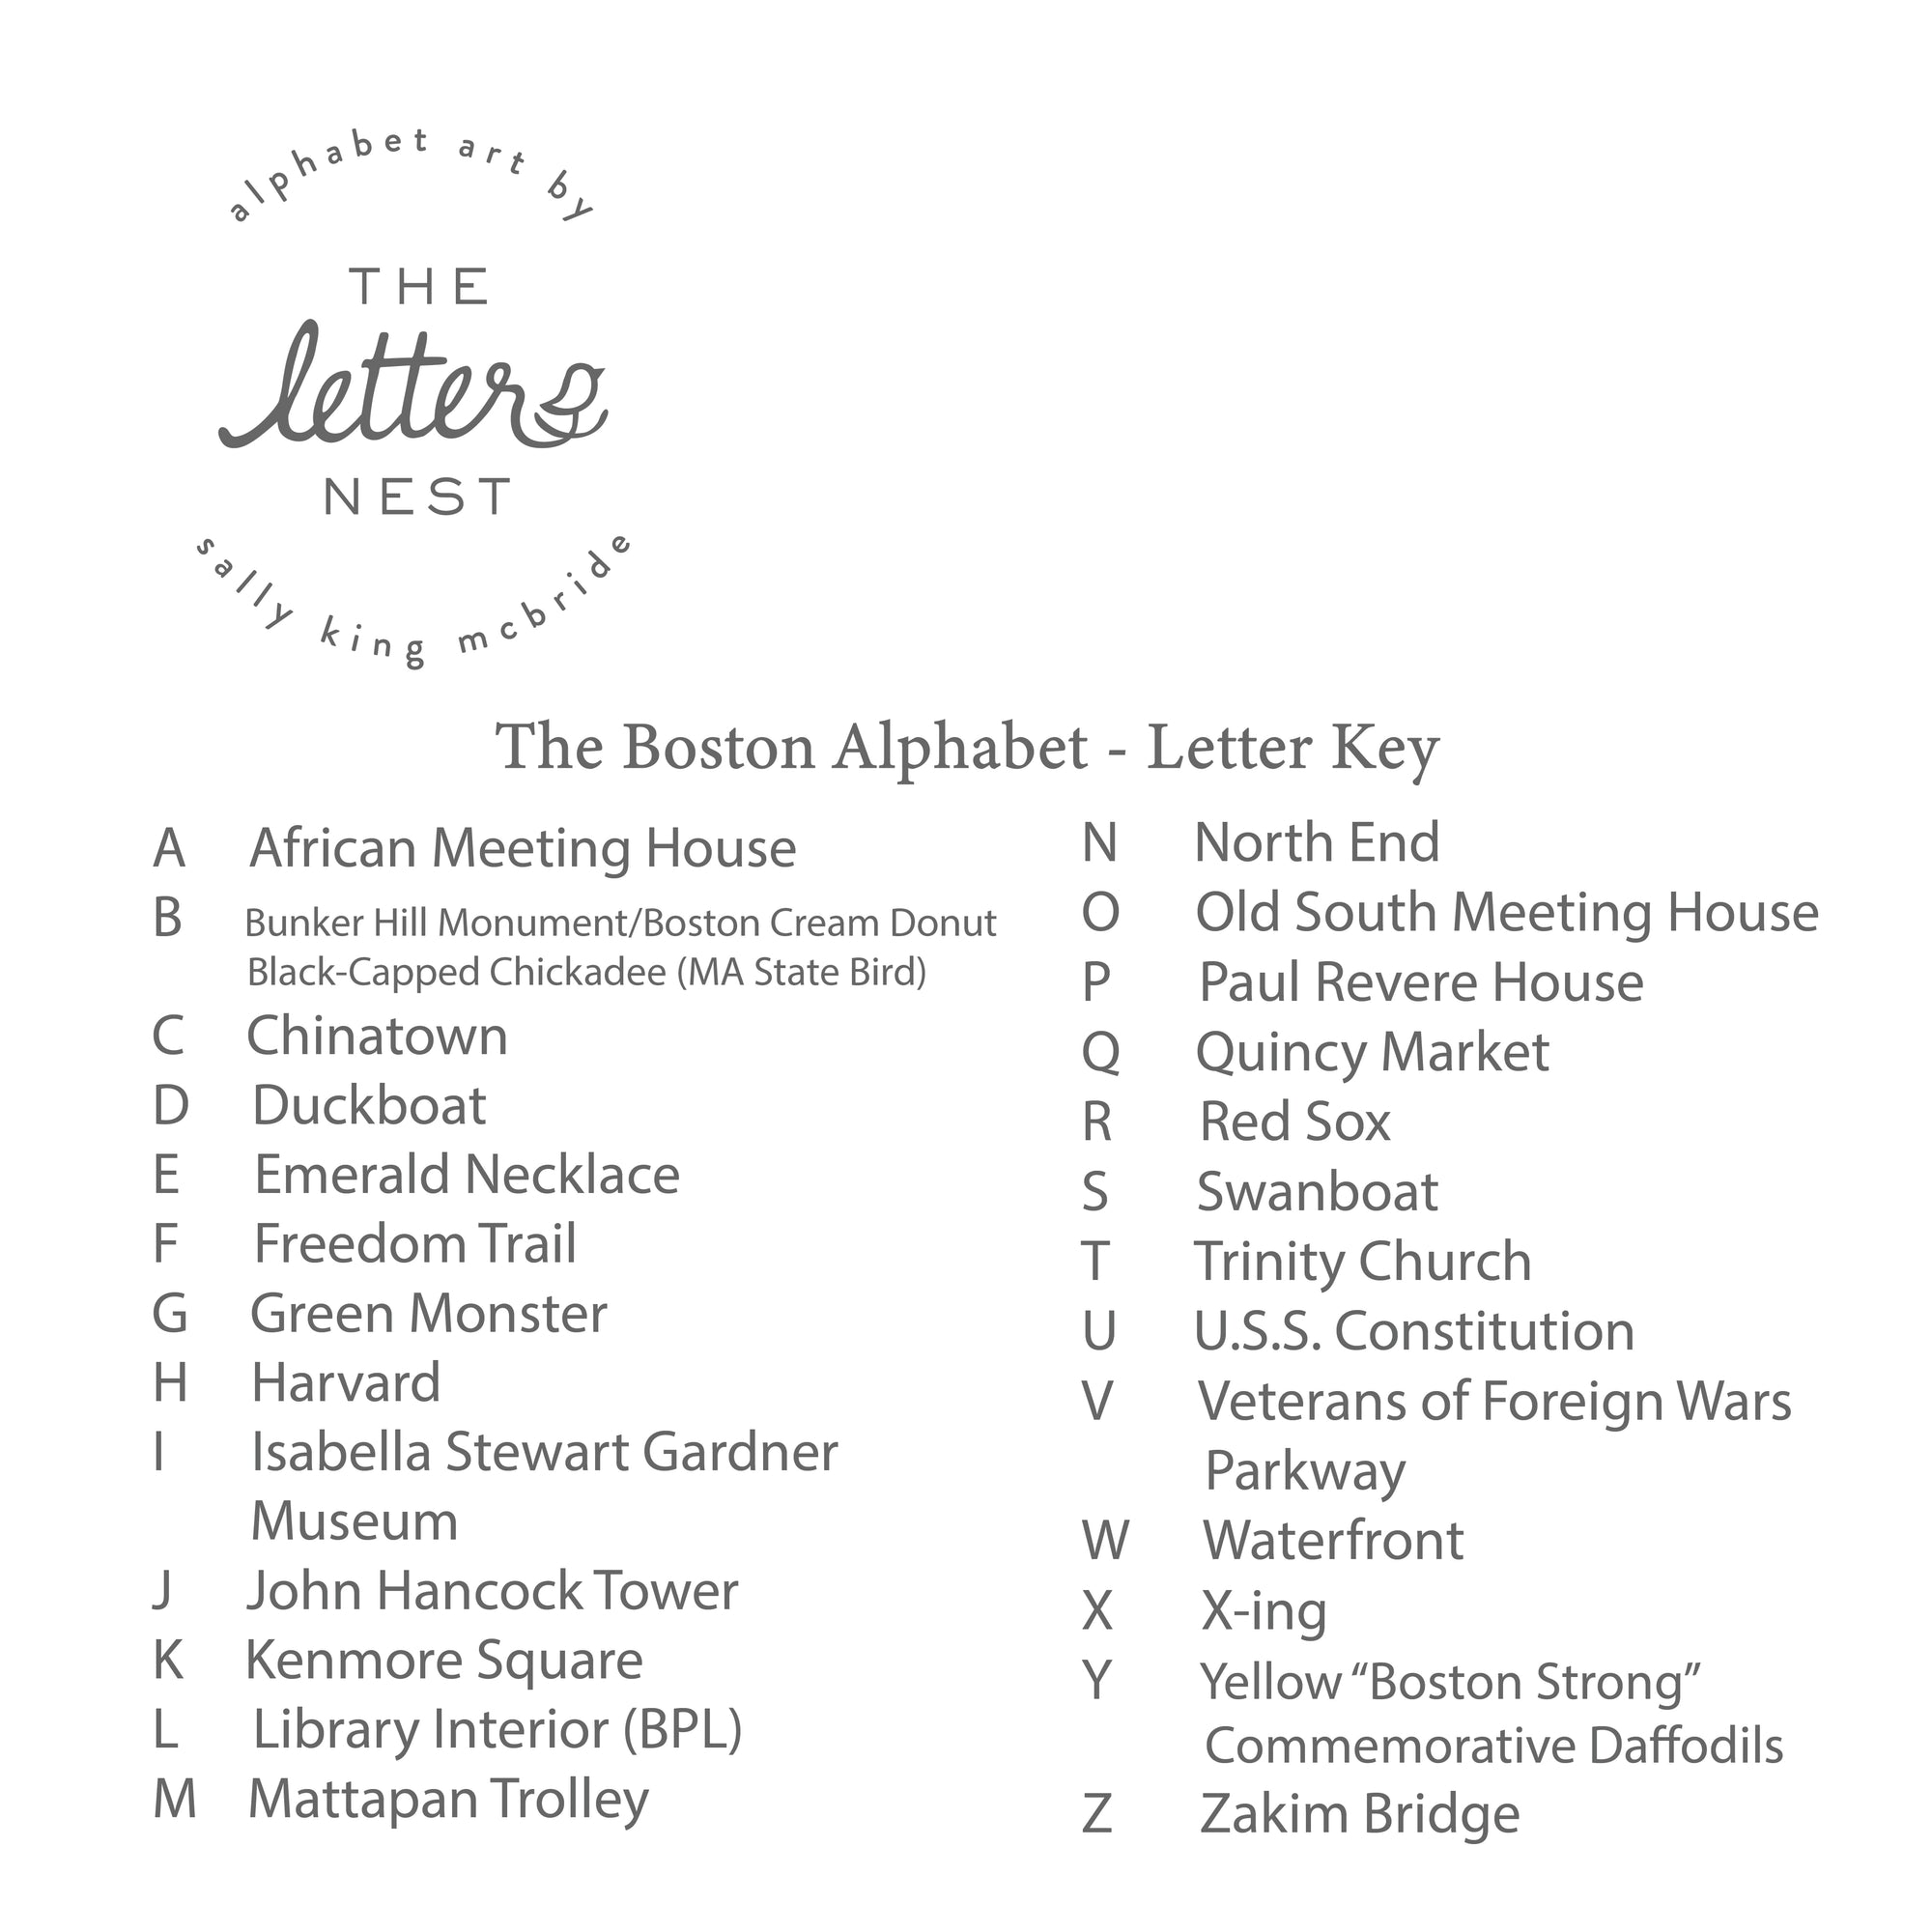 Boston Alphabet - Letter Key